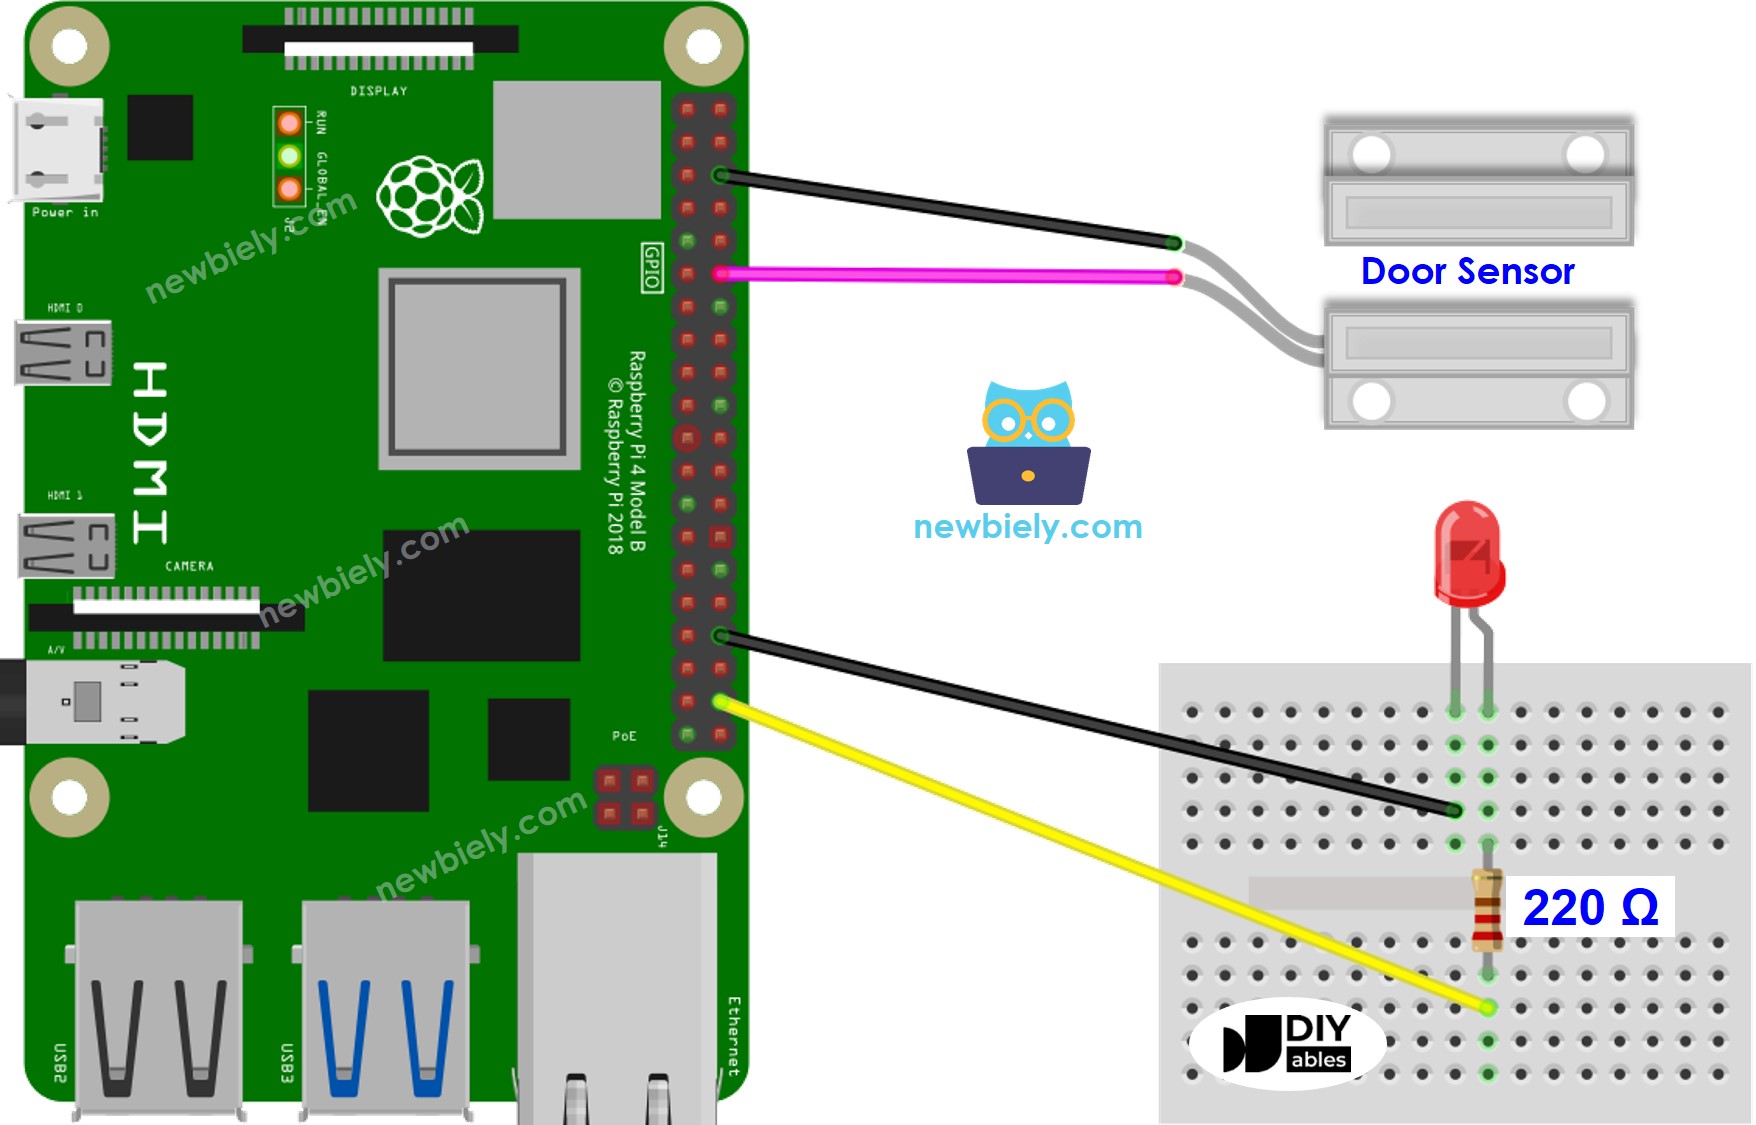 The wiring diagram between Raspberry Pi and Door Sensor LED